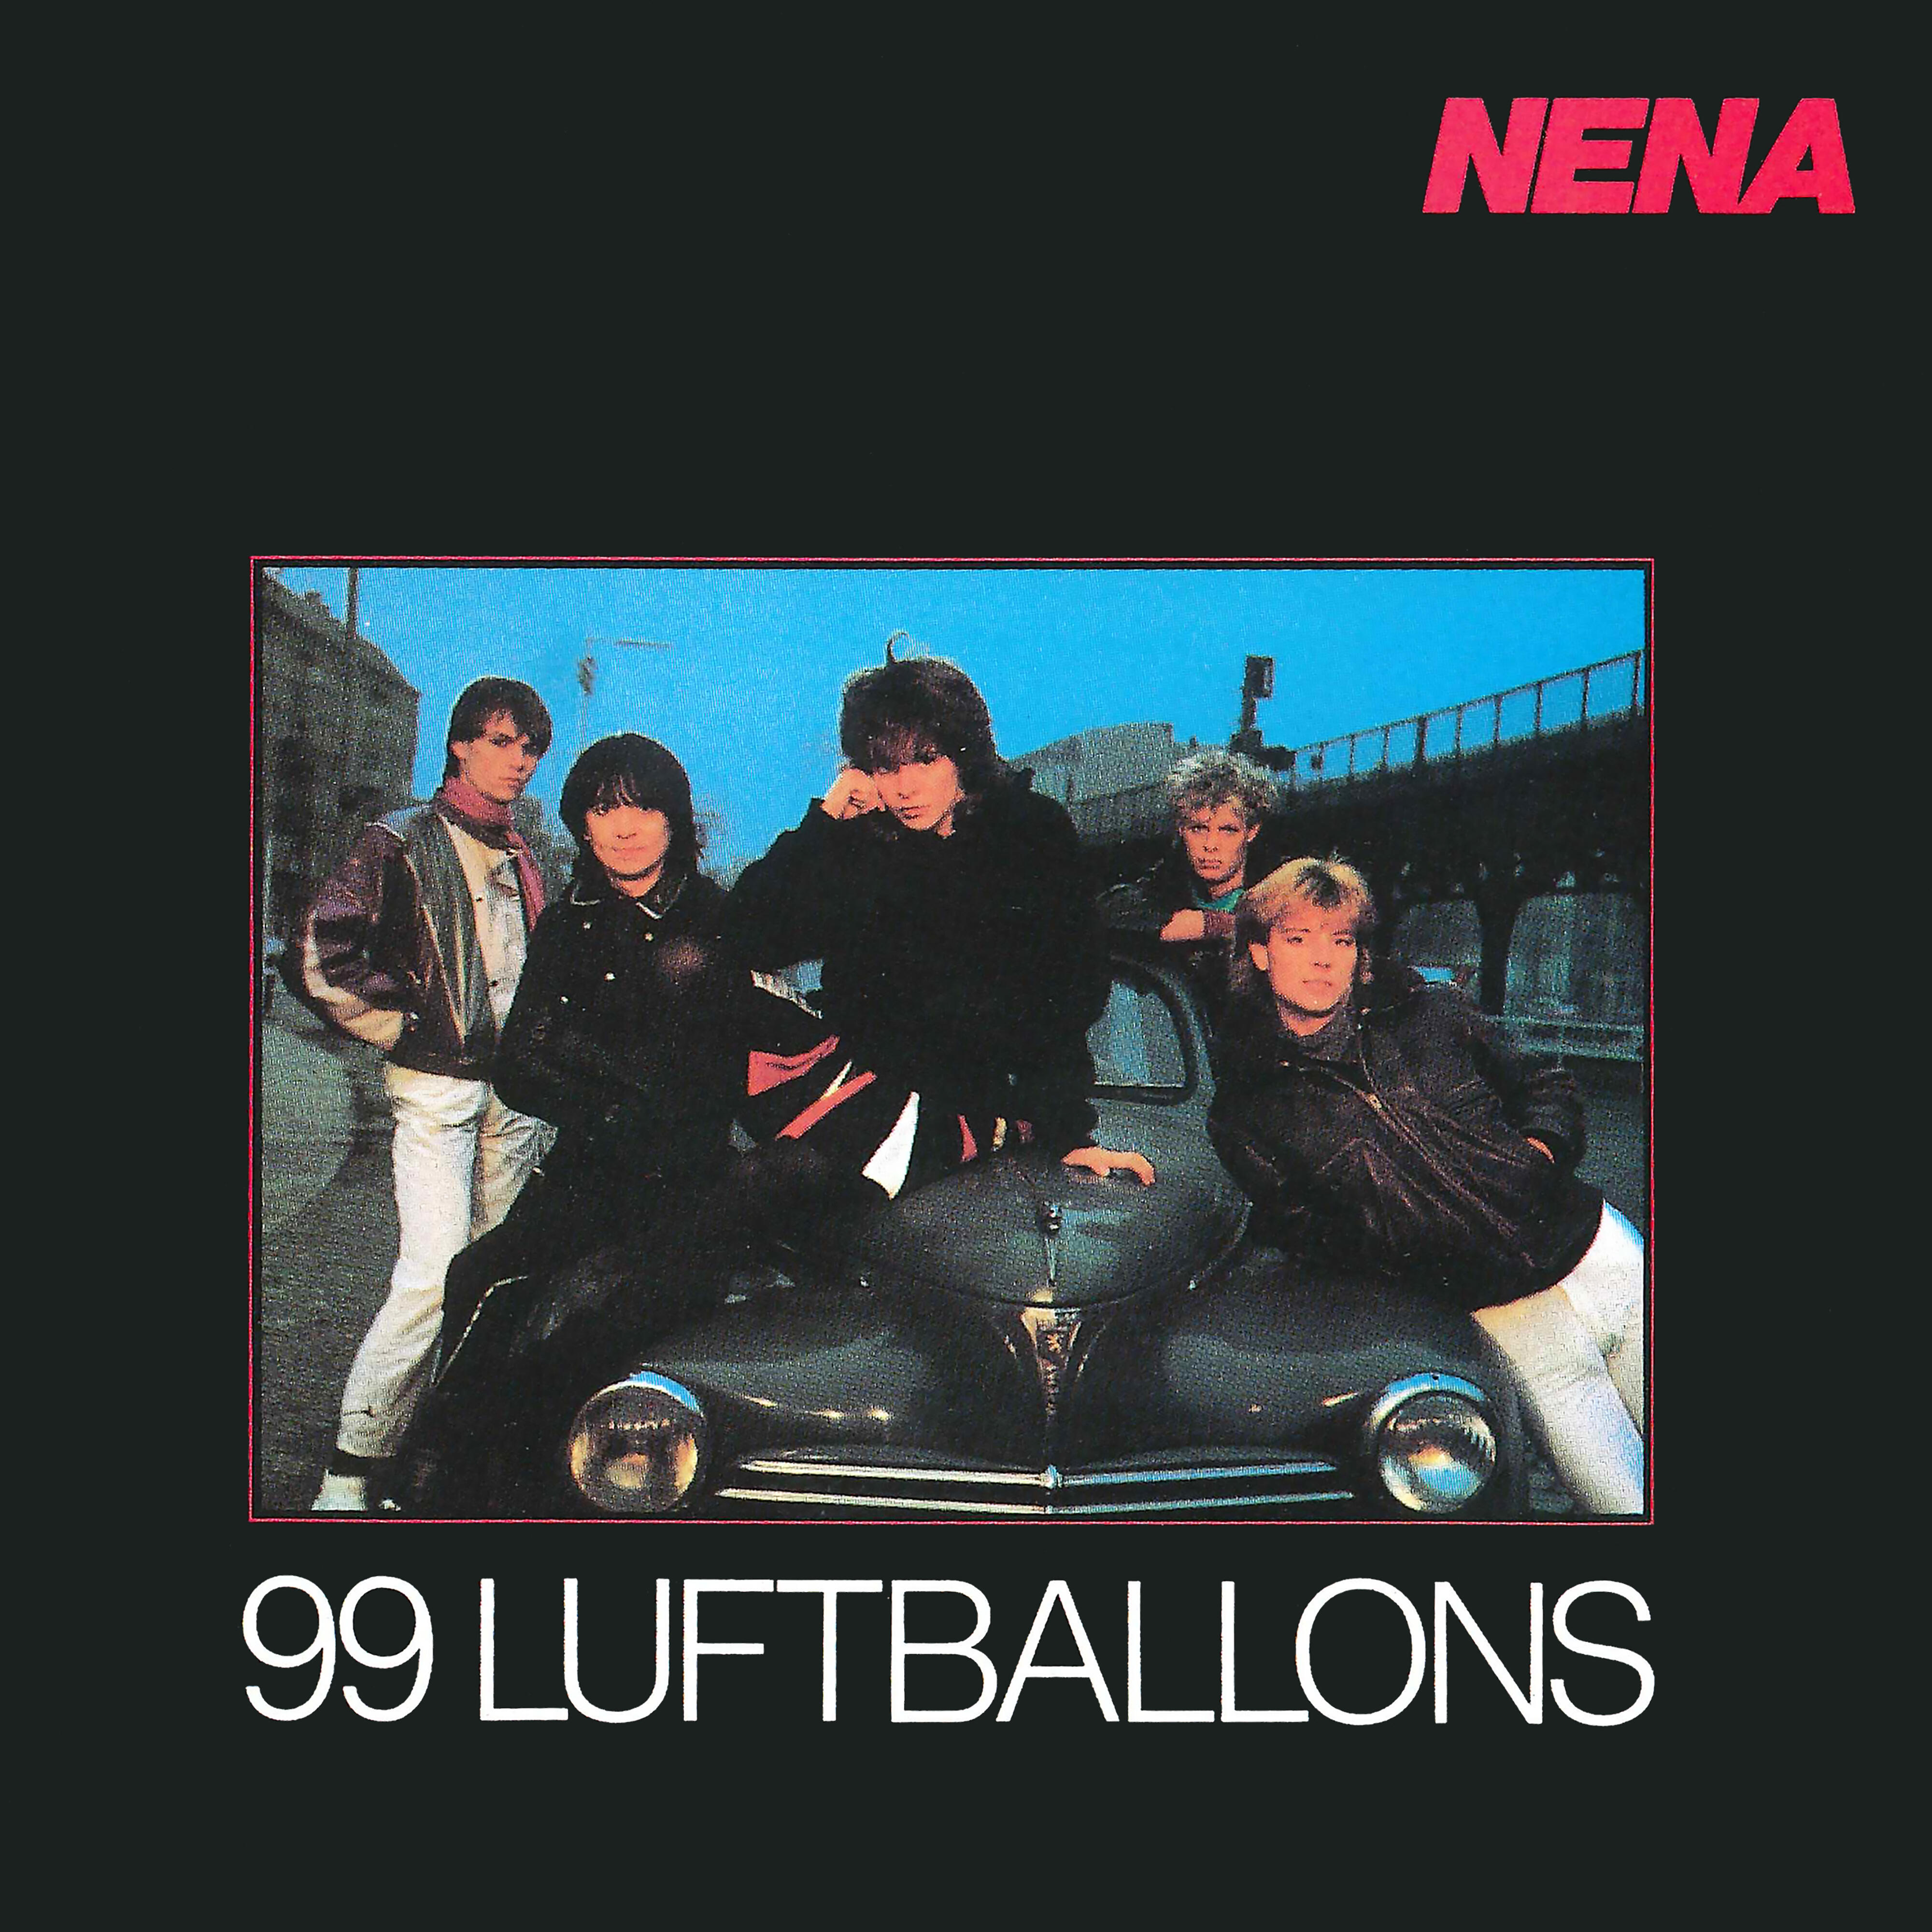 99 luftballons magyarul